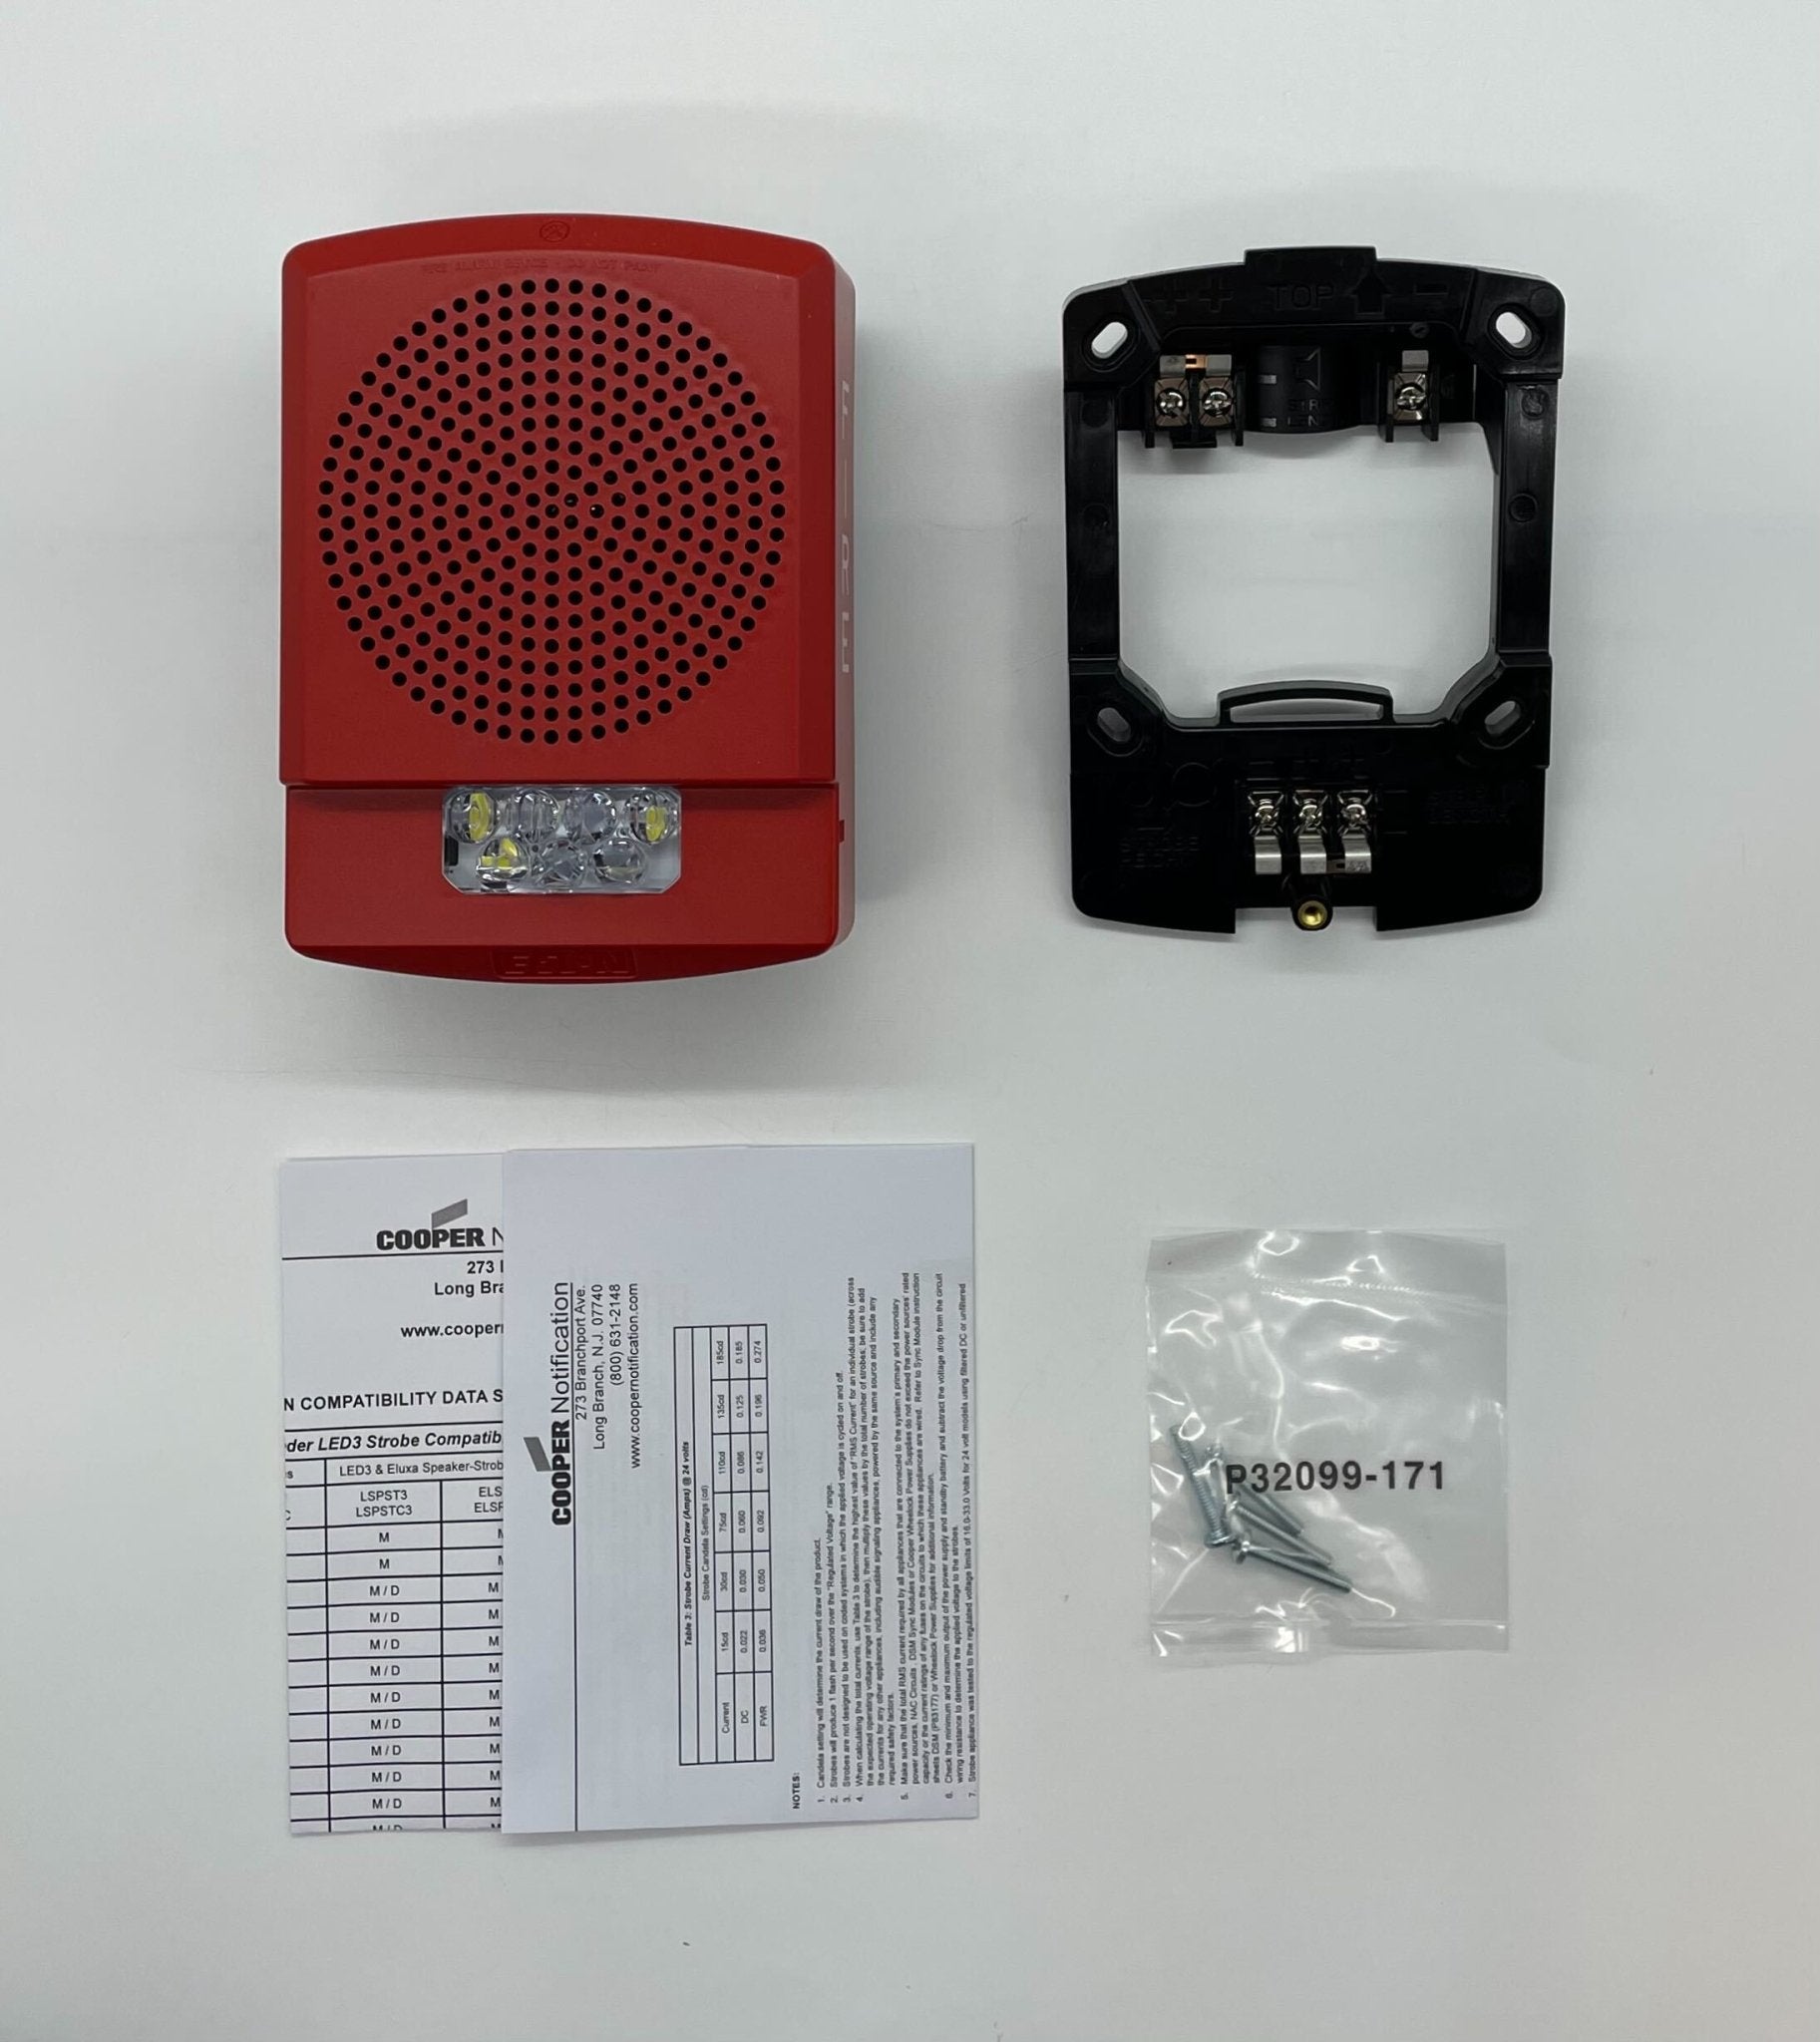 Wheelock ELSPSTR - The Fire Alarm Supplier